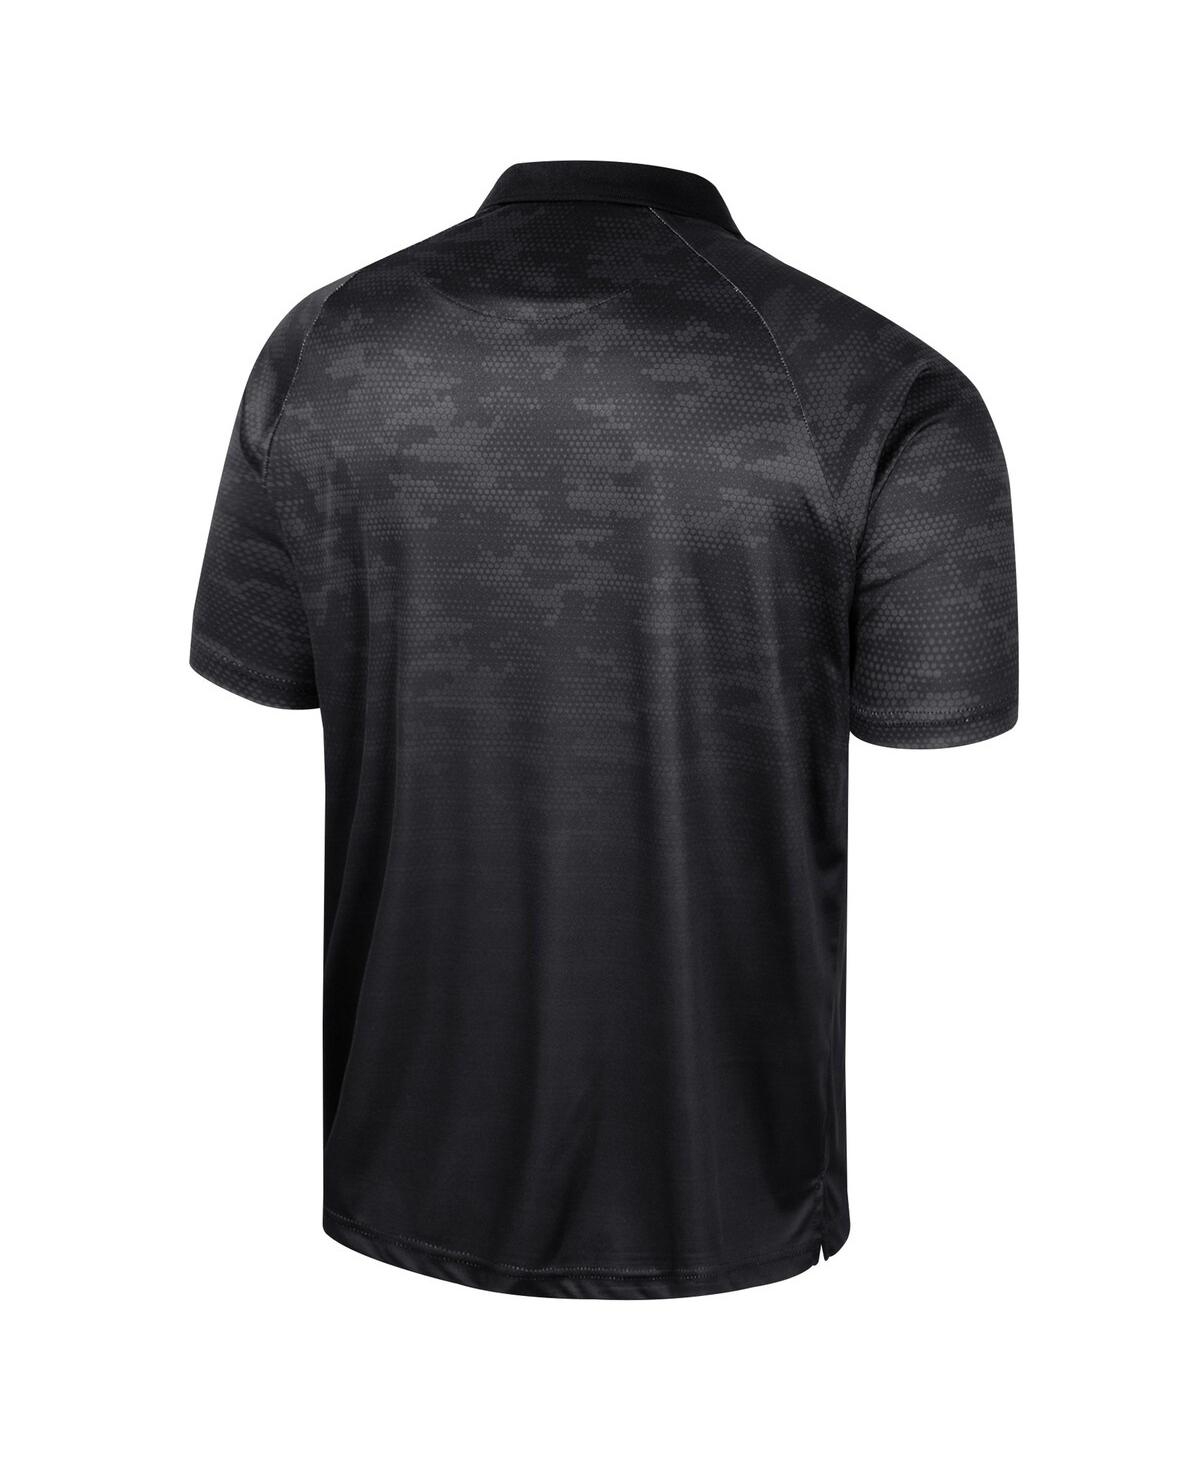 Shop Colosseum Men's  Black Appalachian State Mountaineers Honeycomb Raglan Polo Shirt